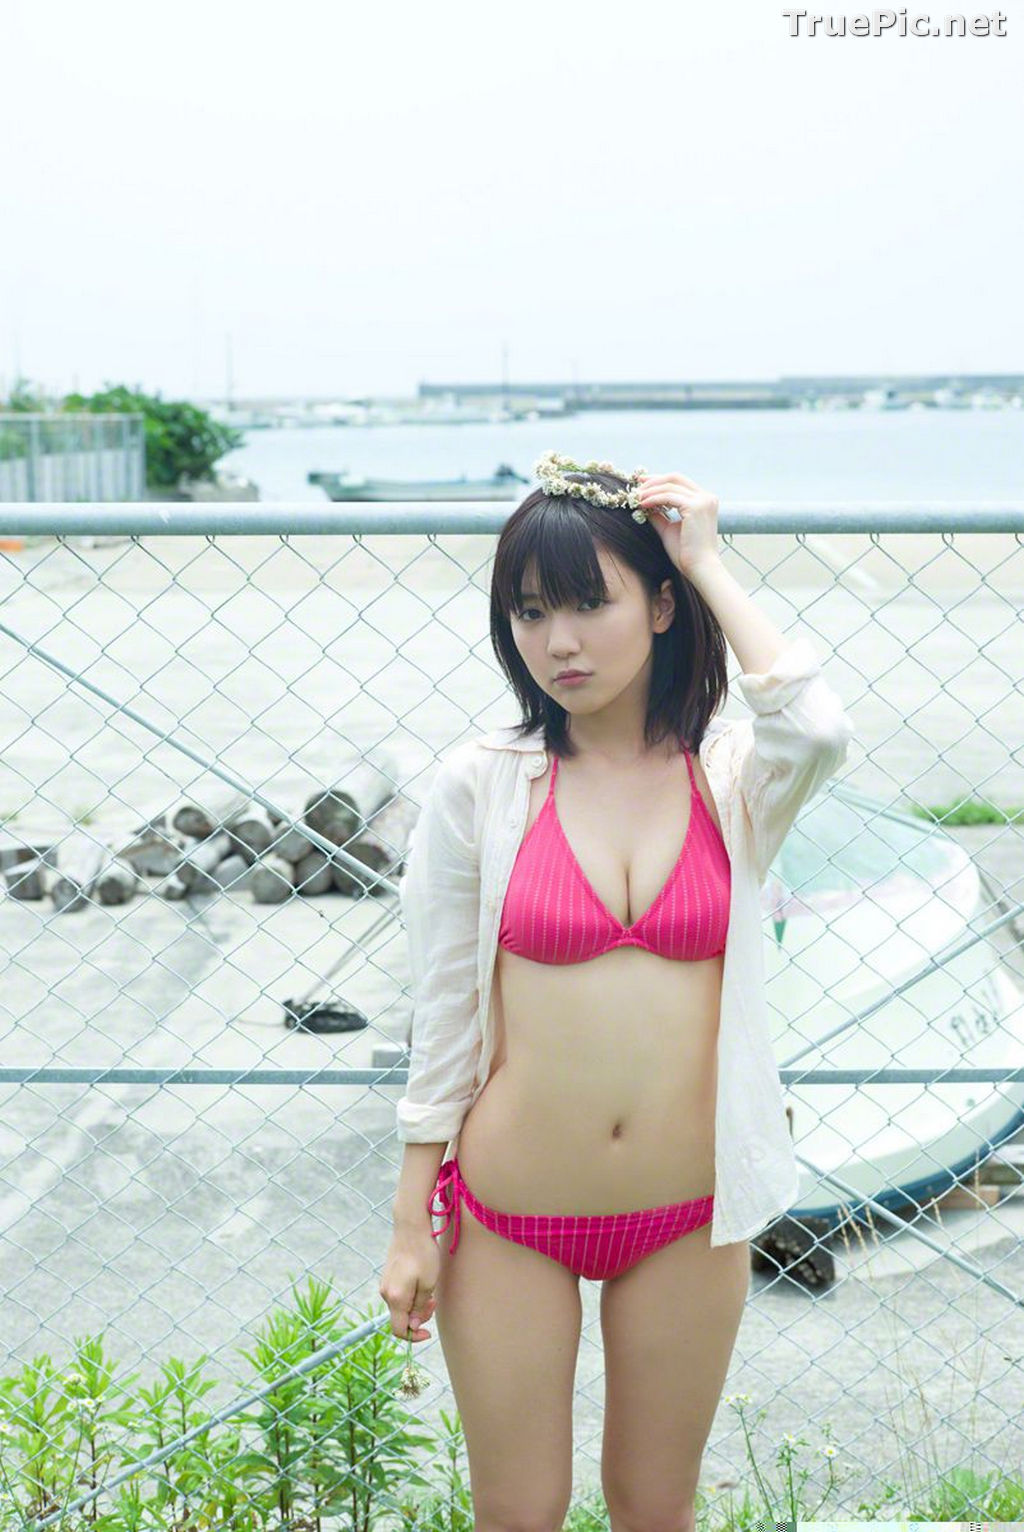 Image Wanibooks No.130 - Japanese Idol Singer and Actress - Erina Mano - TruePic.net - Picture-159